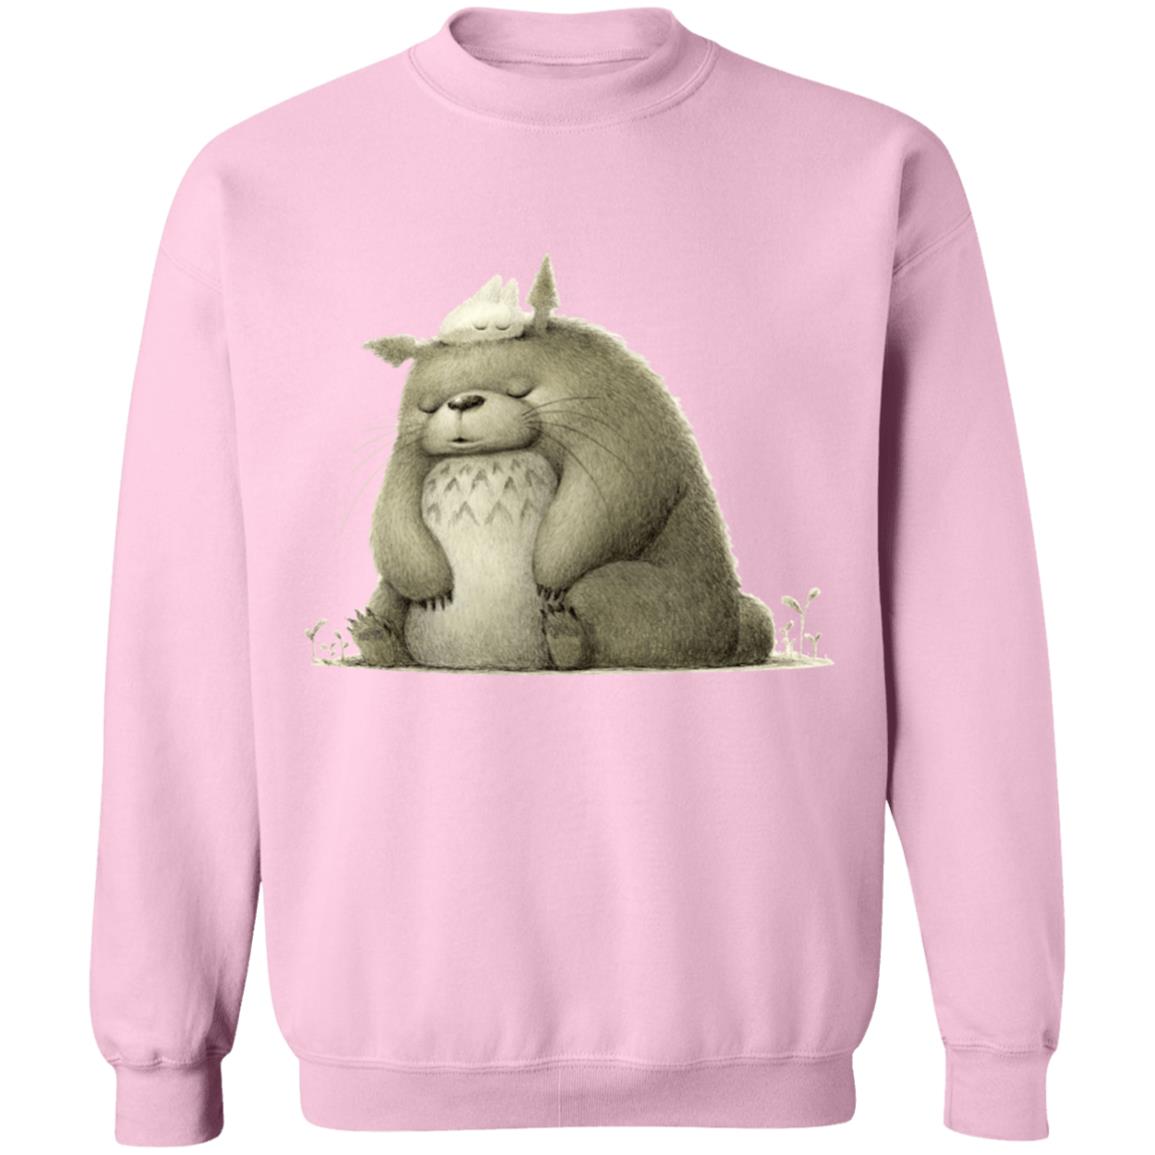 The Fluffy Totoro Sweatshirt